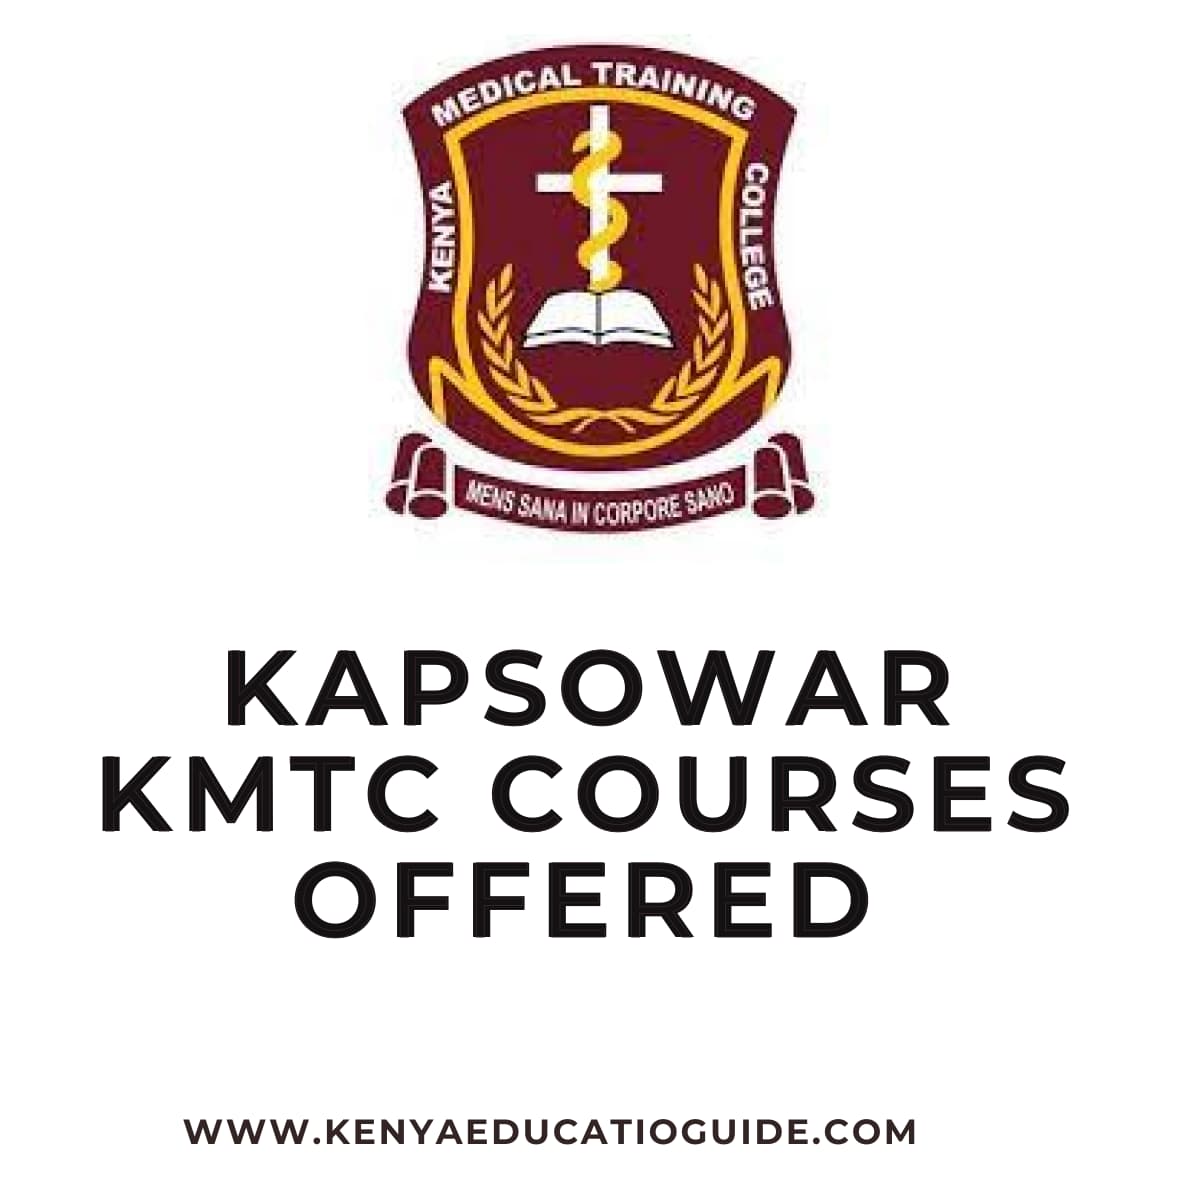 Kapsowar KMTC Courses Offered